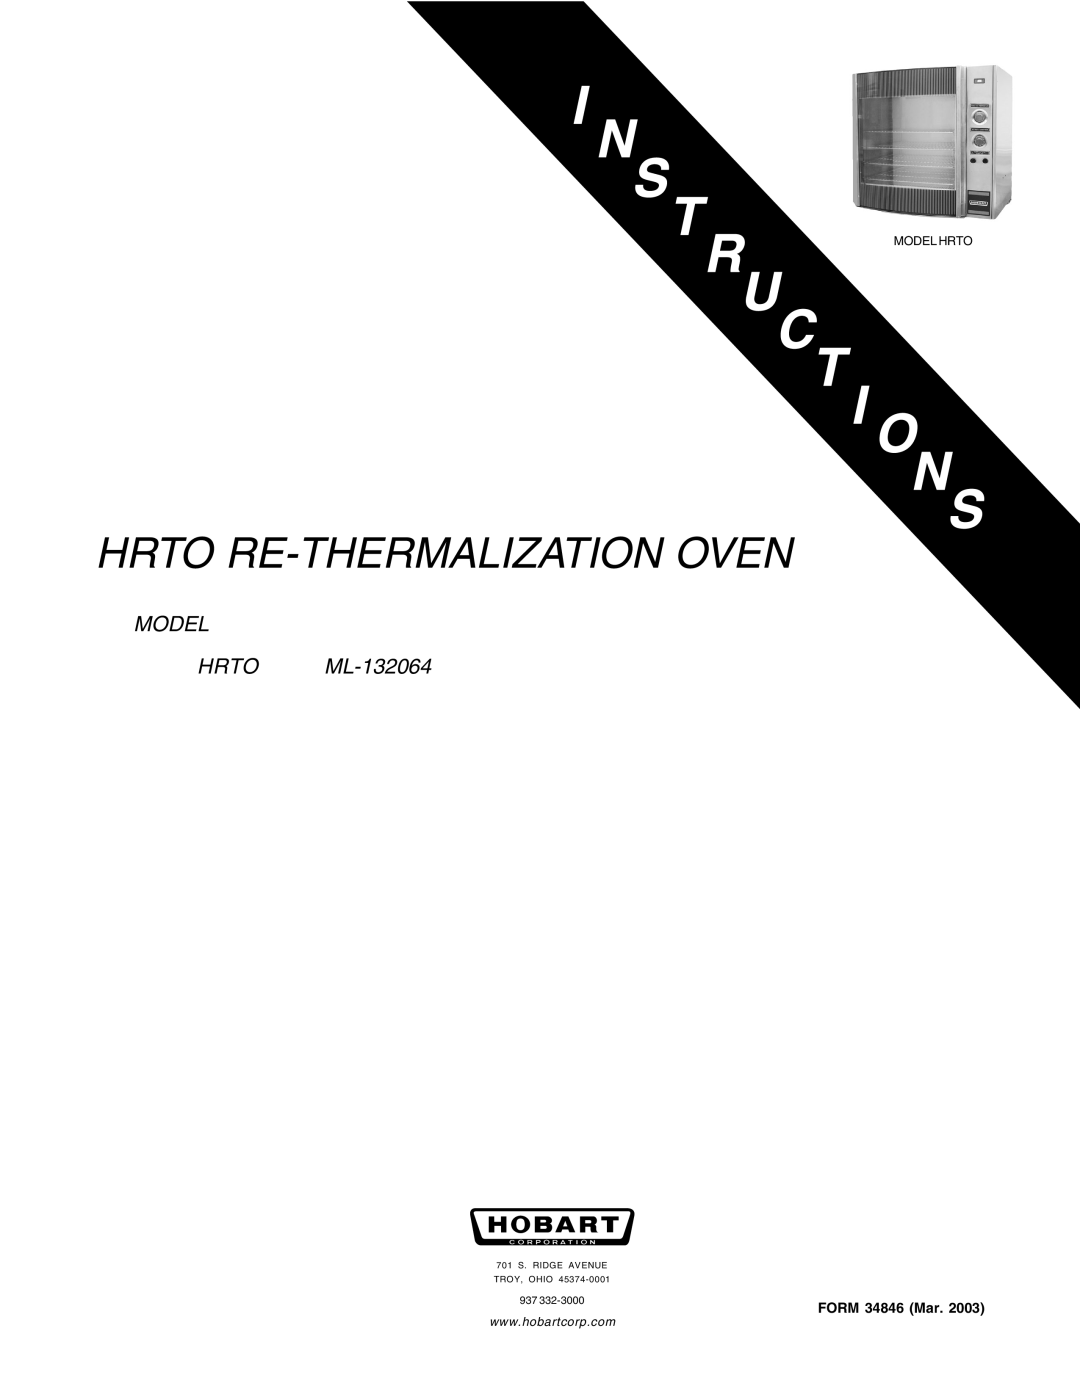 Hobart manual Hrto Re-Thermalizationoven, MODEL HRTO ML-132064, FORM 34846 Mar, Model Hrto 